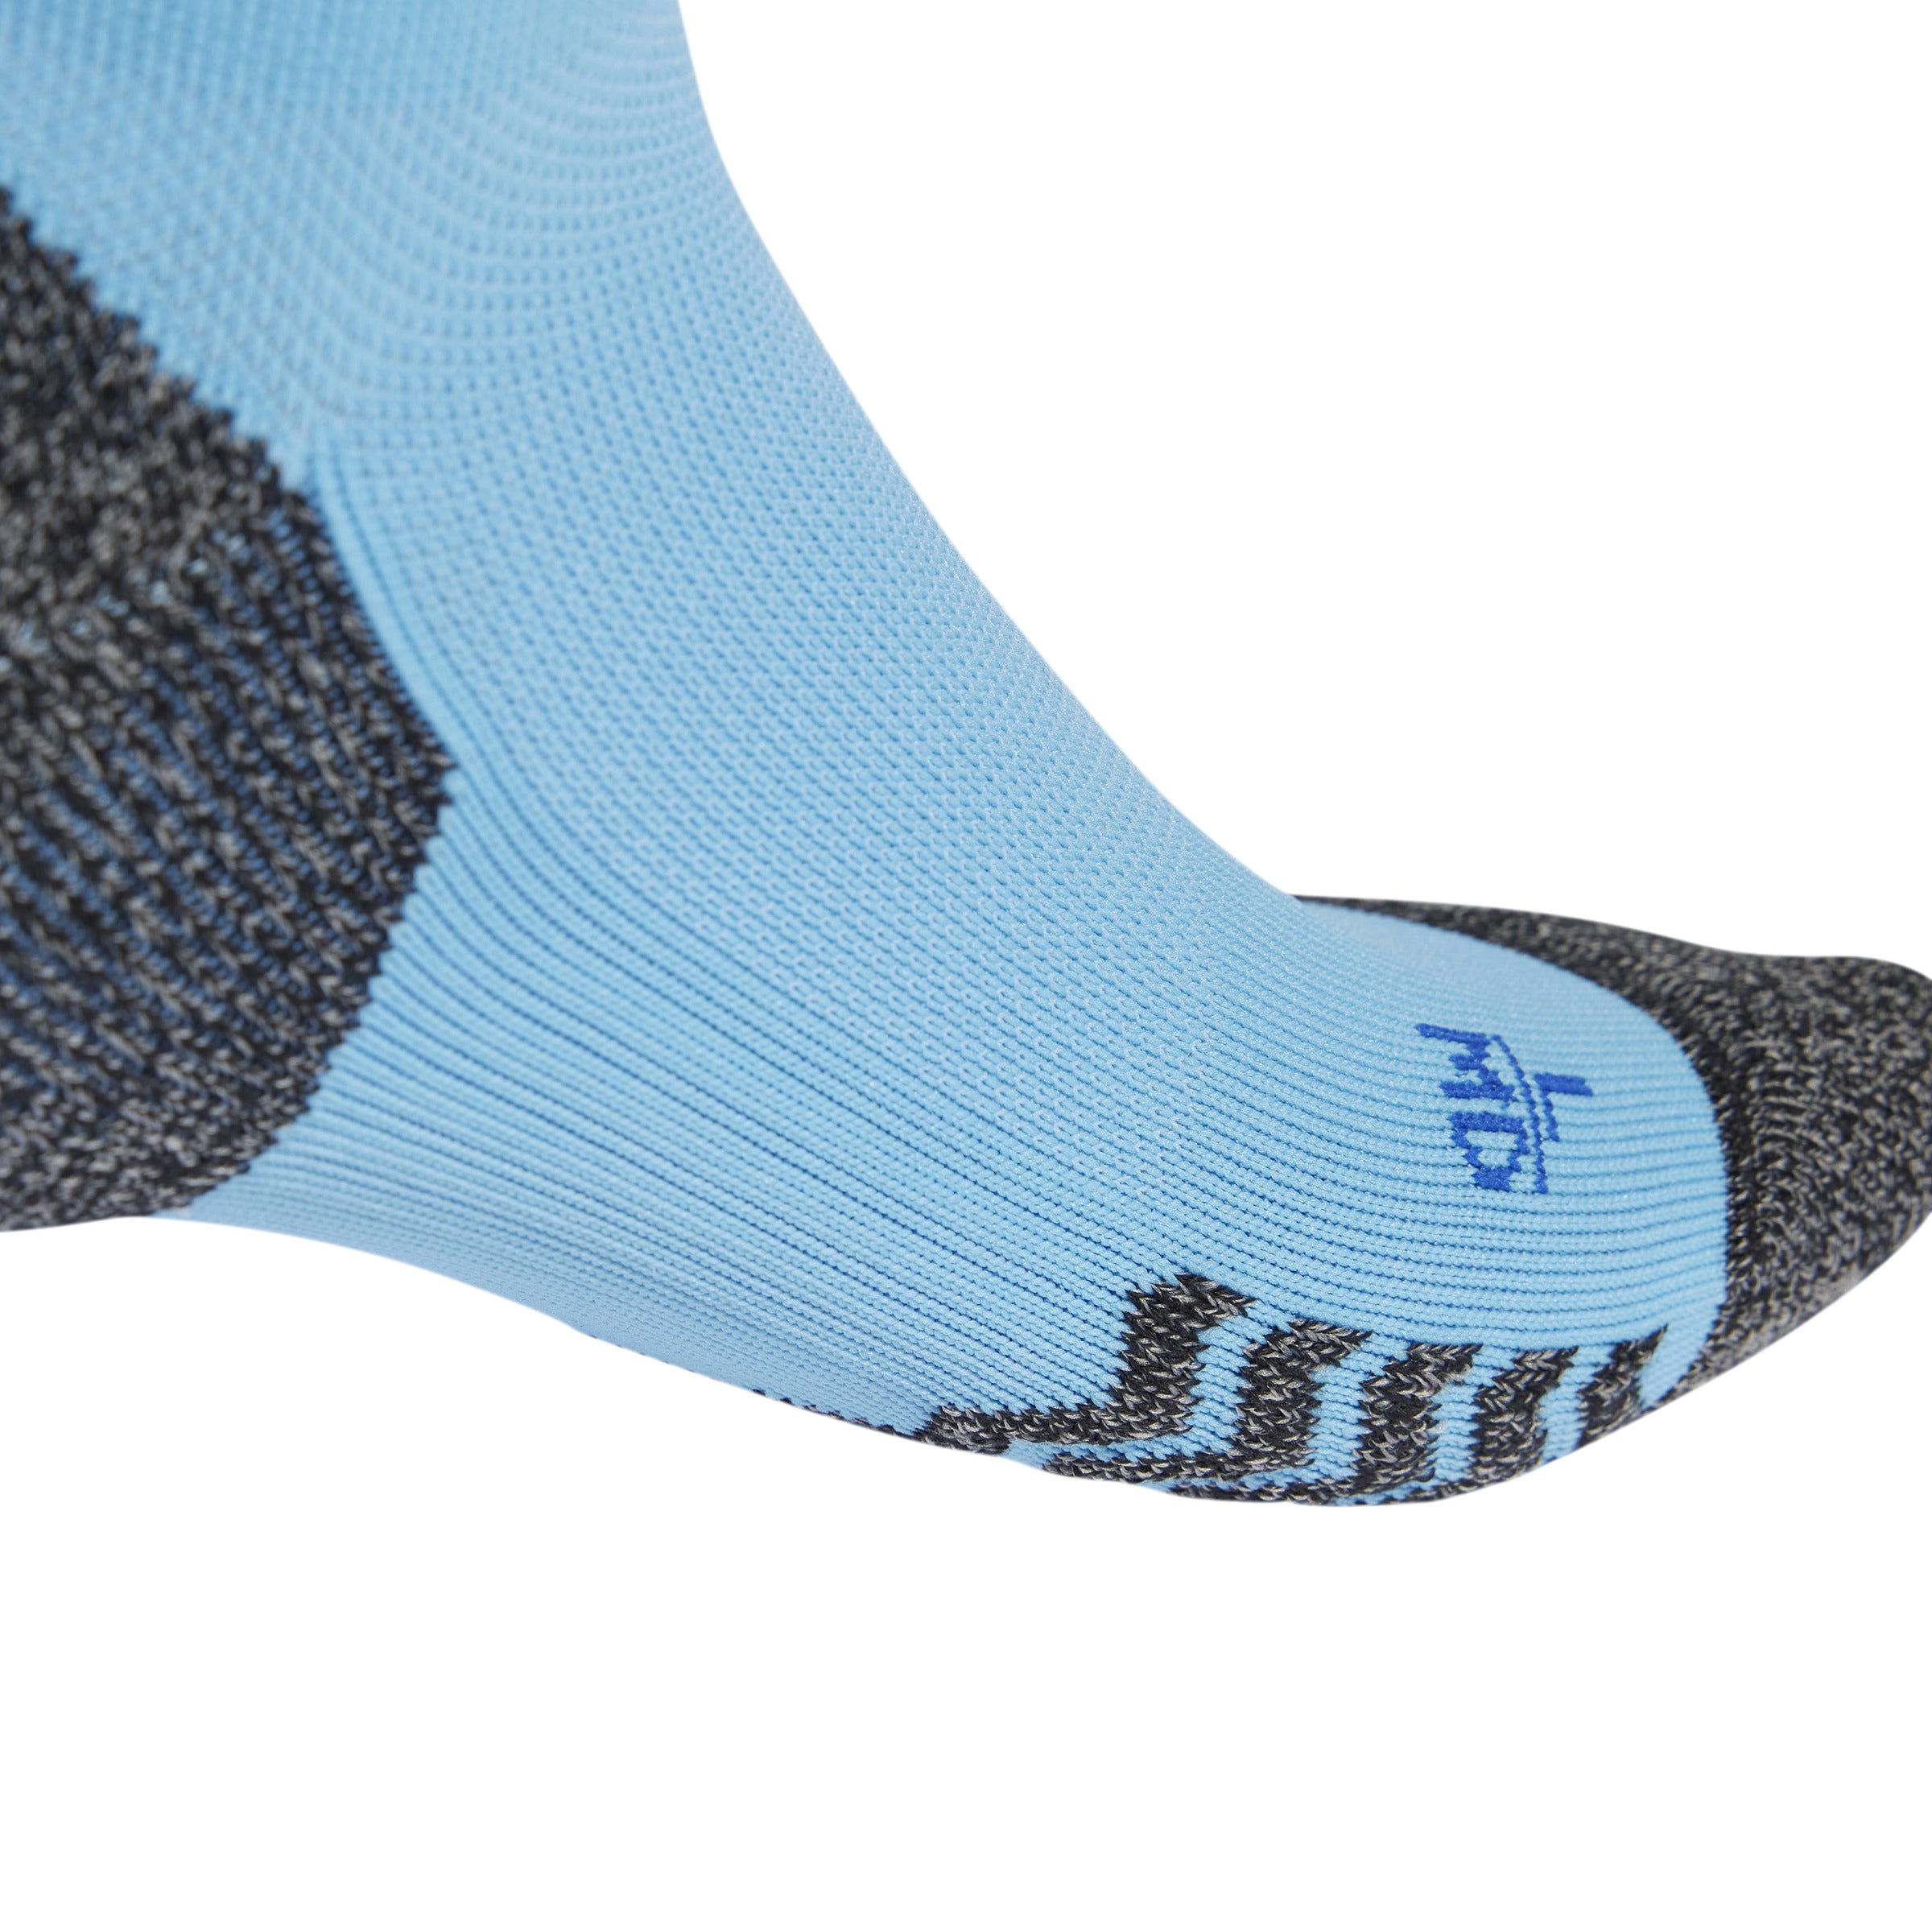 Adidas Adi 23 Sock (Light Blue) - IM8904